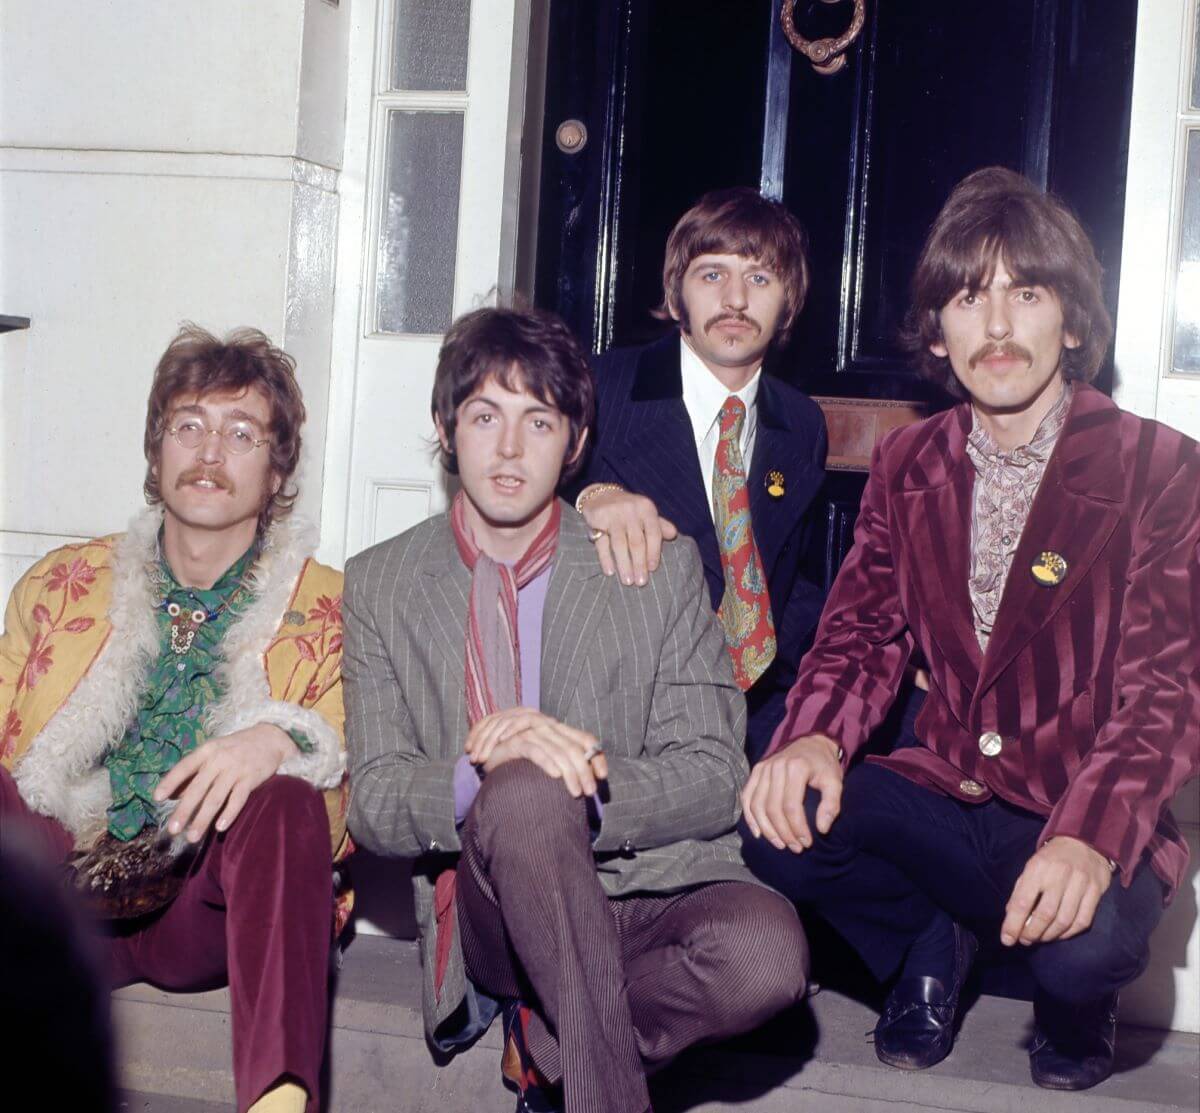 John Lennon, Paul McCartney, Ringo Starr, and George Harrison of The Beatles crouch on a doorstep.